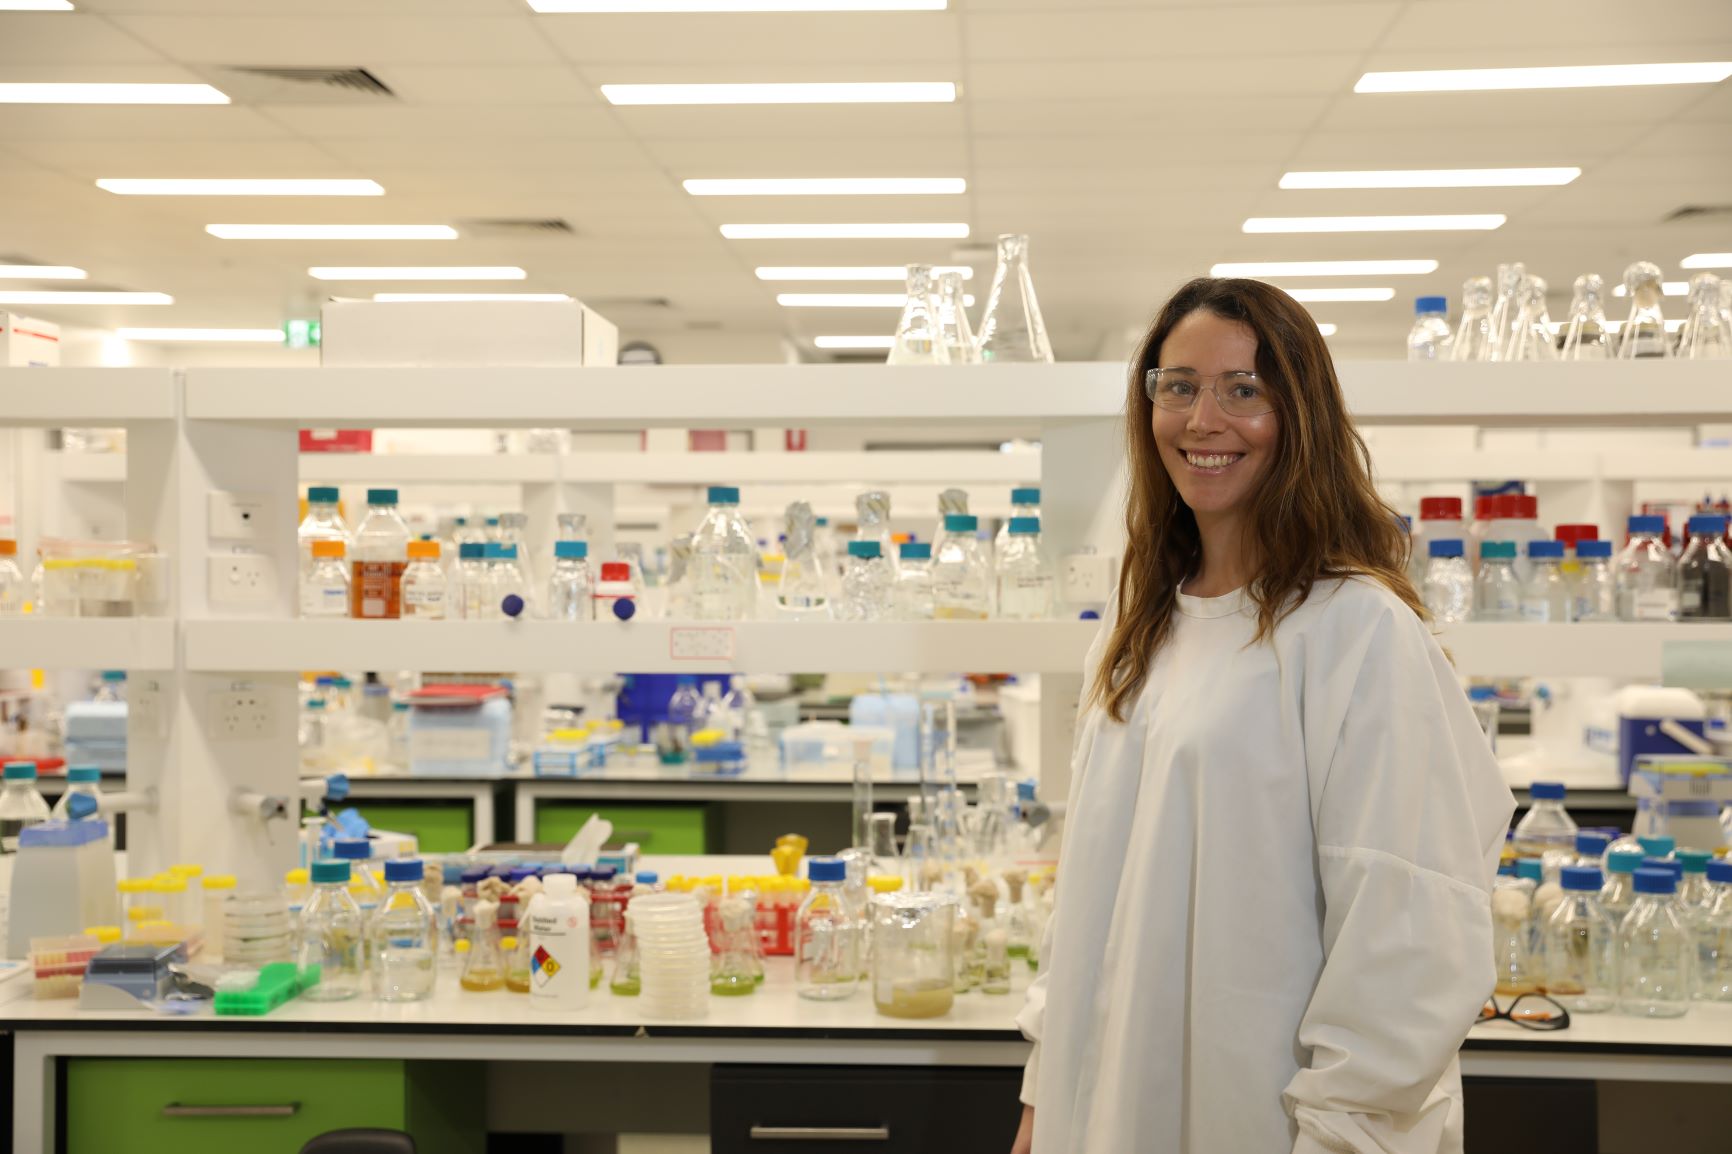 Professor Natalie standing in a lab